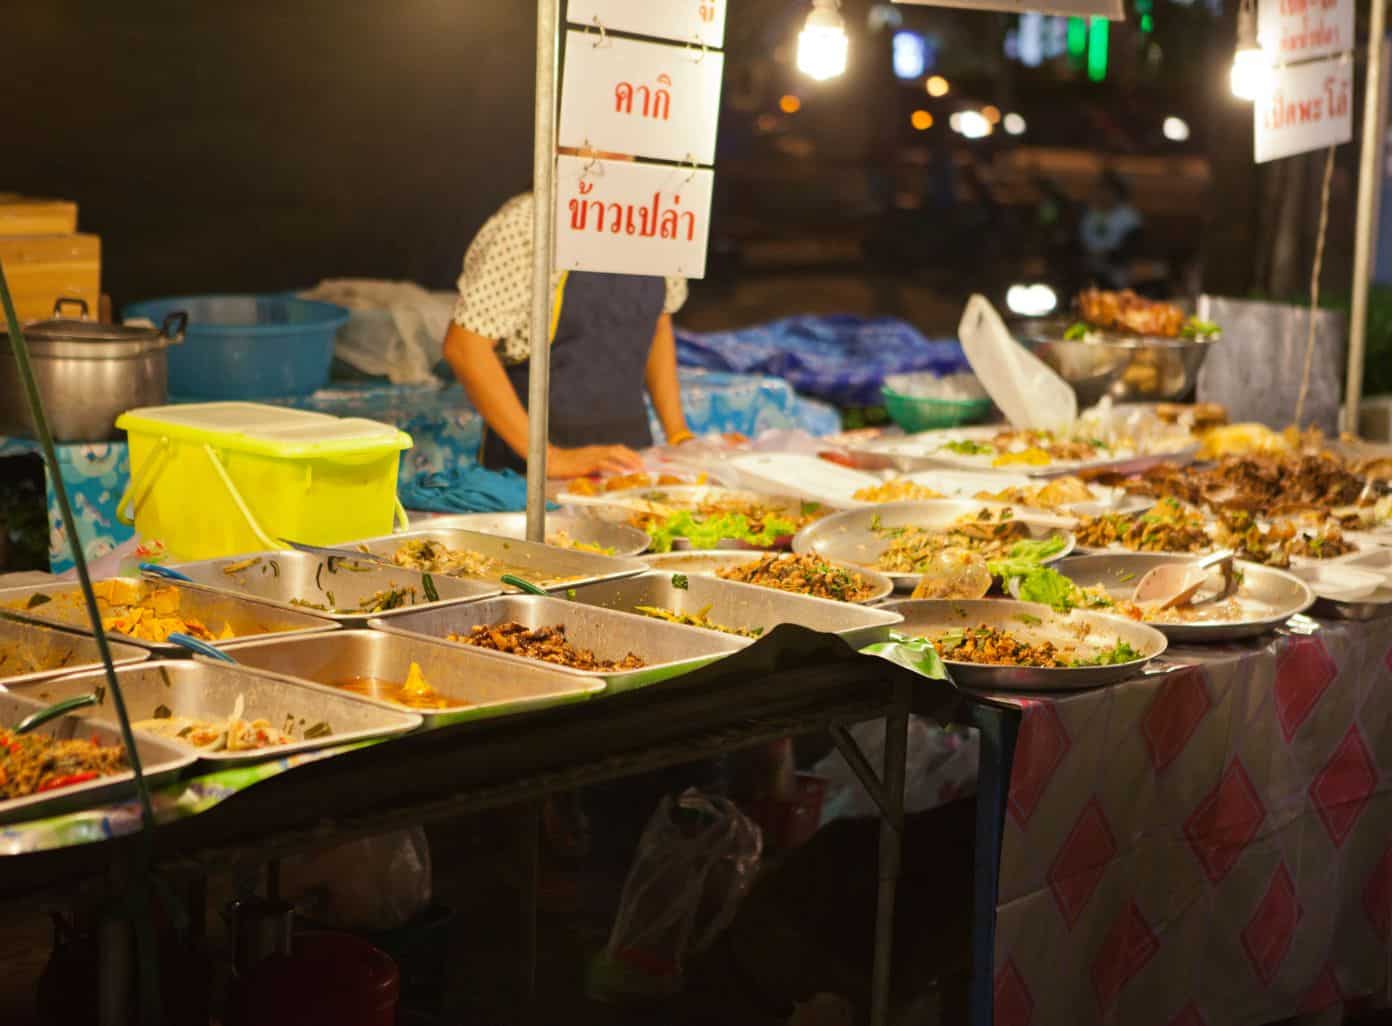 Bangkok's Street Food Culture